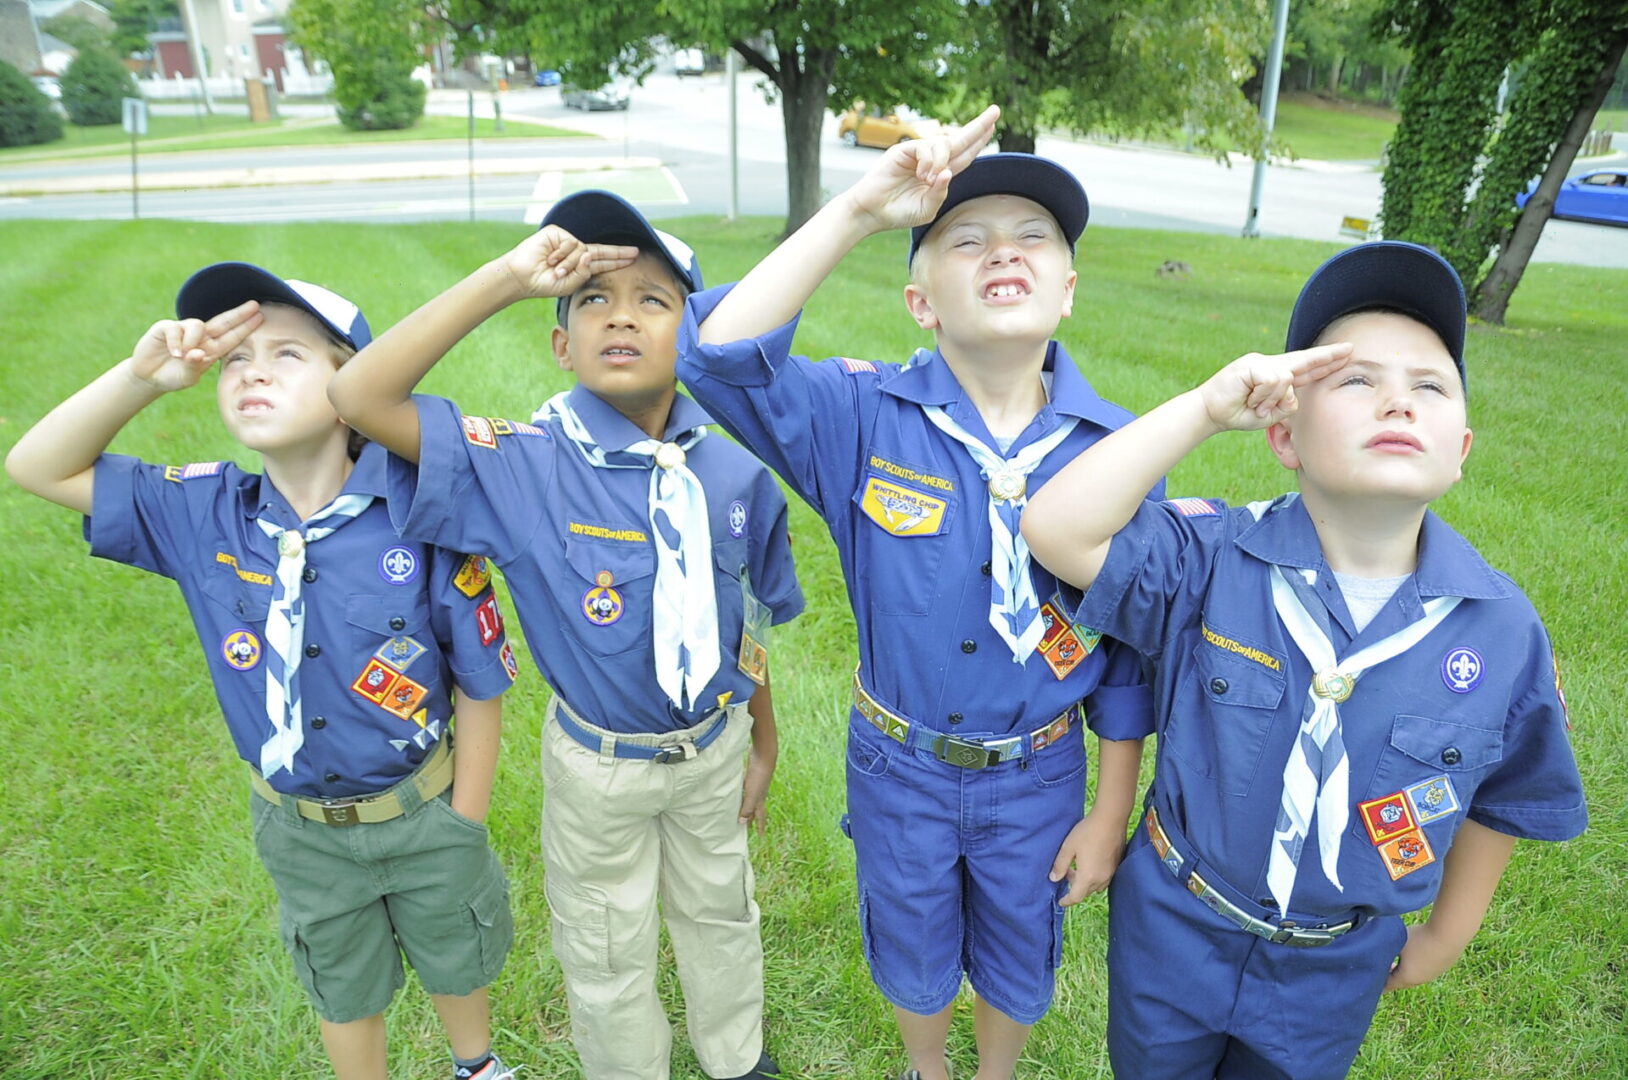 Bear Cub Scout Handbook 2014 - Cubs saluting the American flag